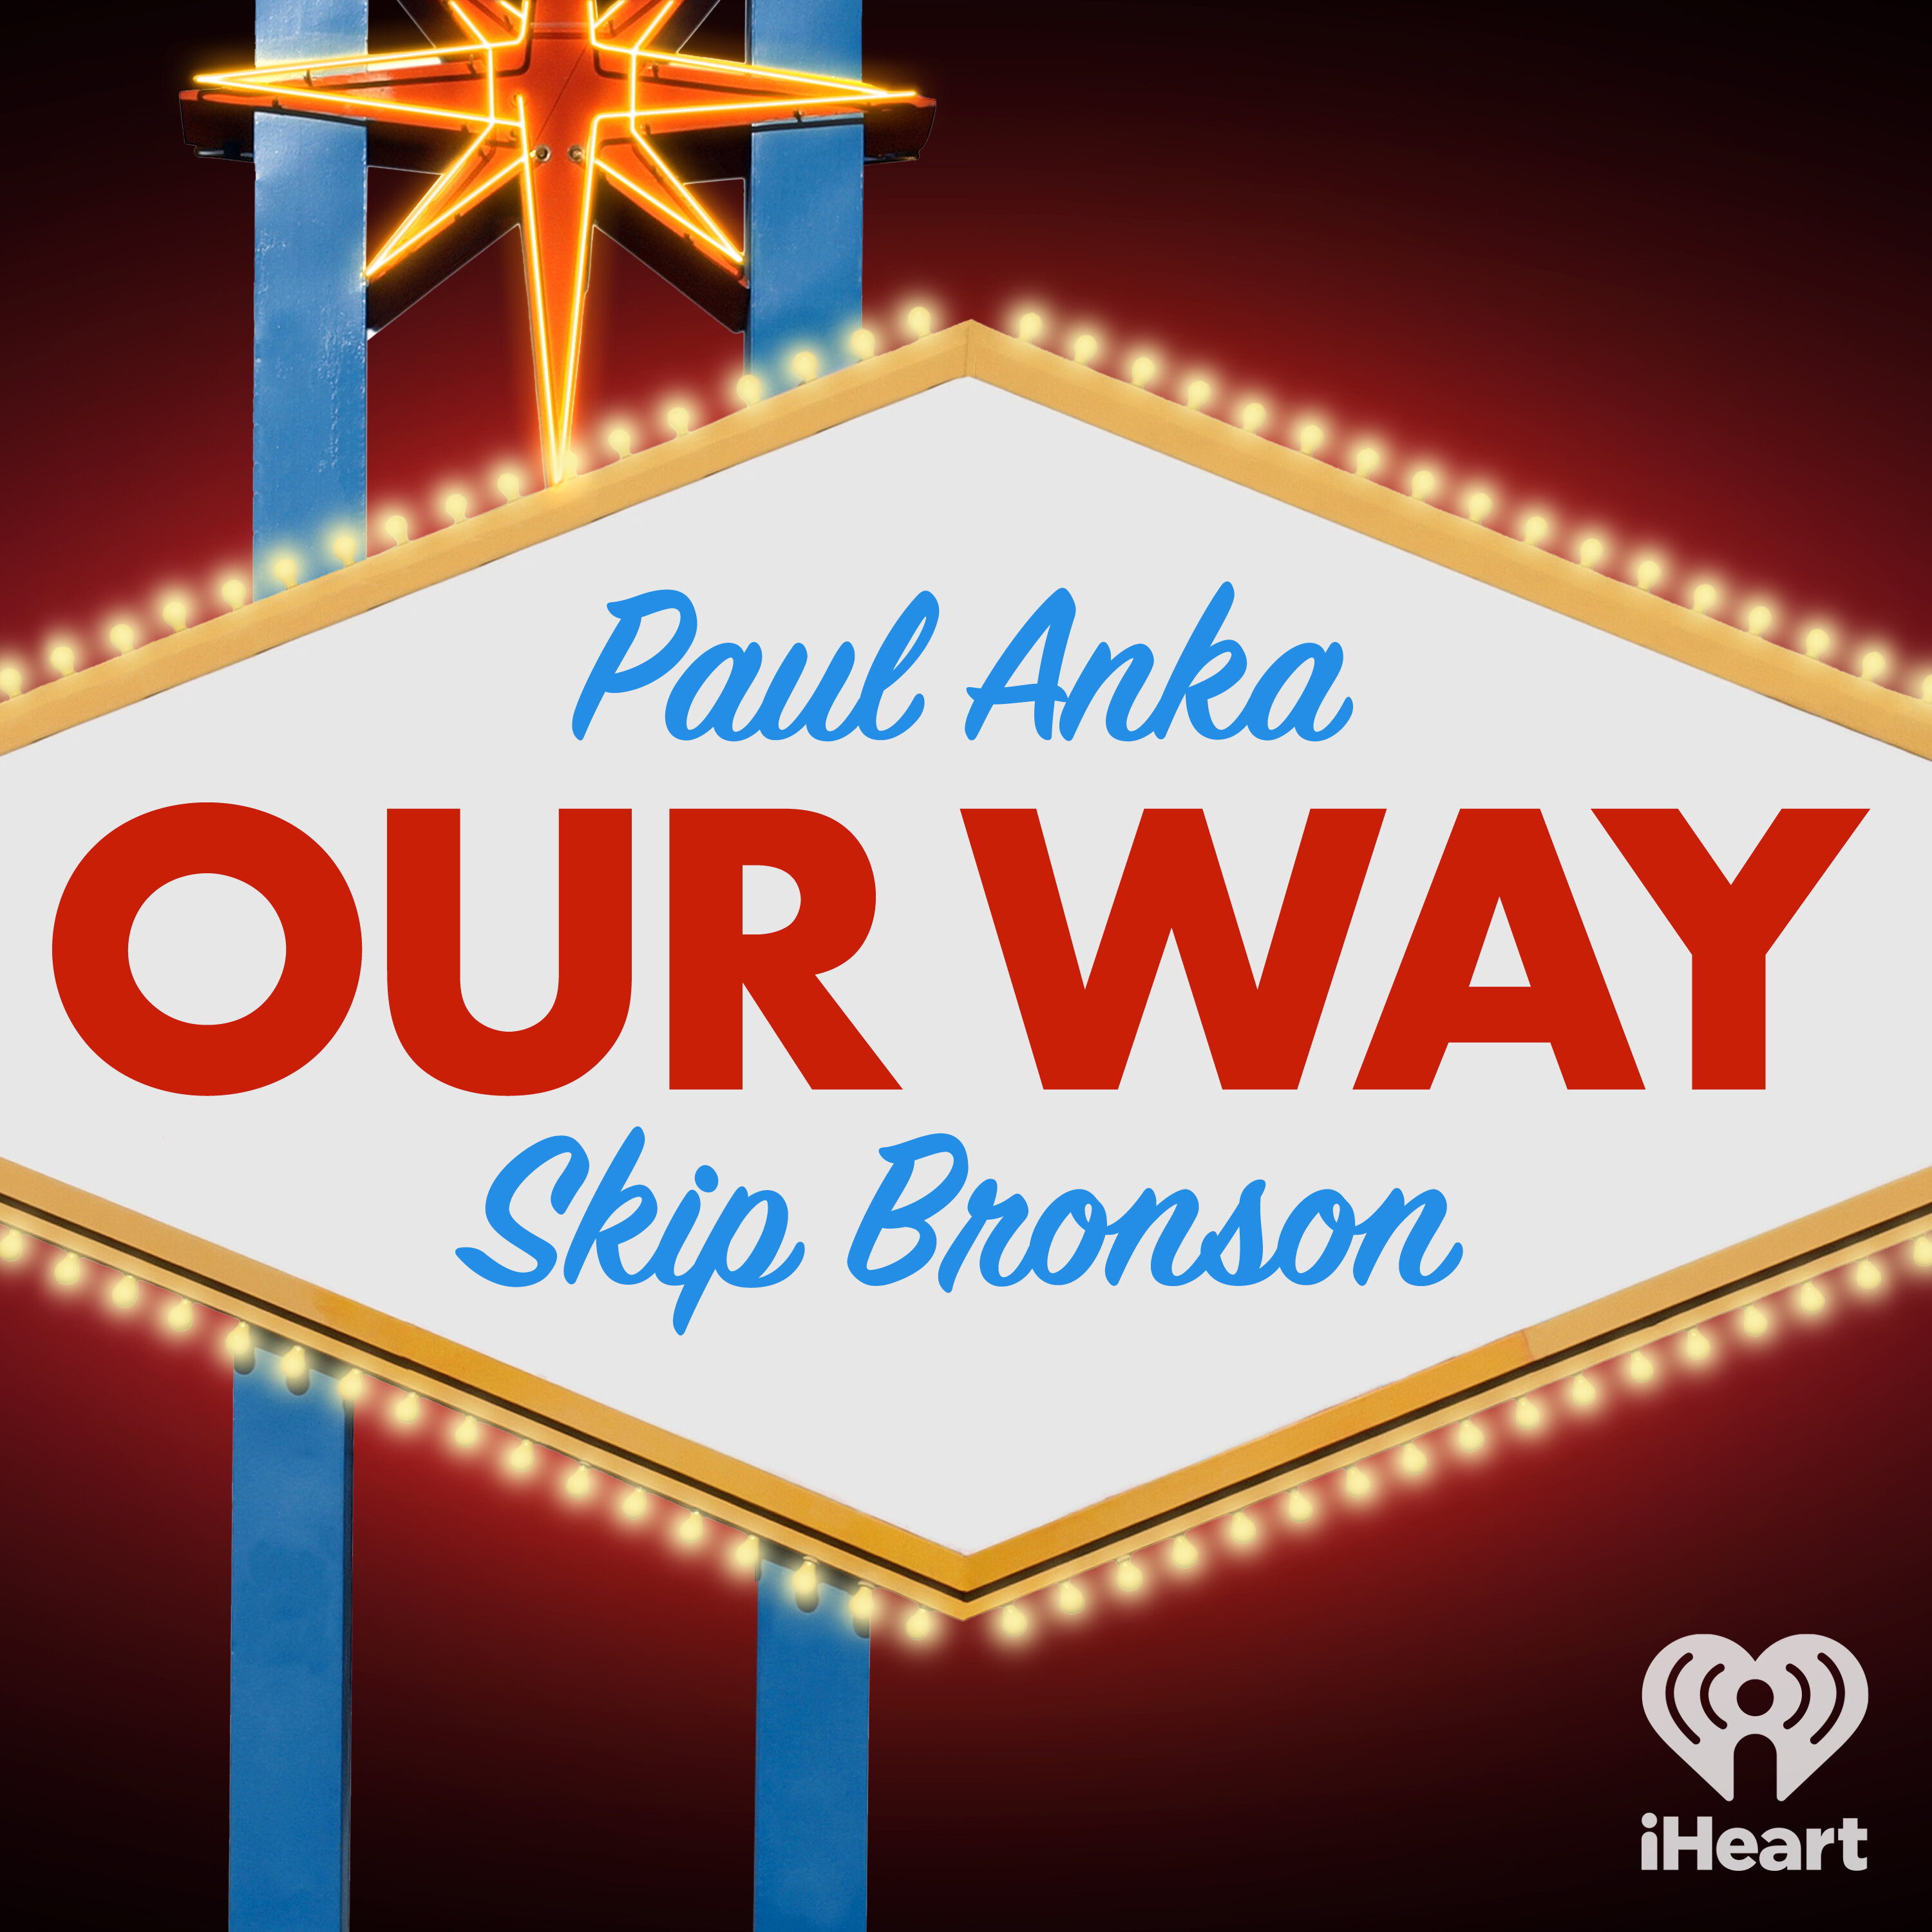 Introducing: Our Way with Paul Anka & Skip Bronson - Alec Baldwin